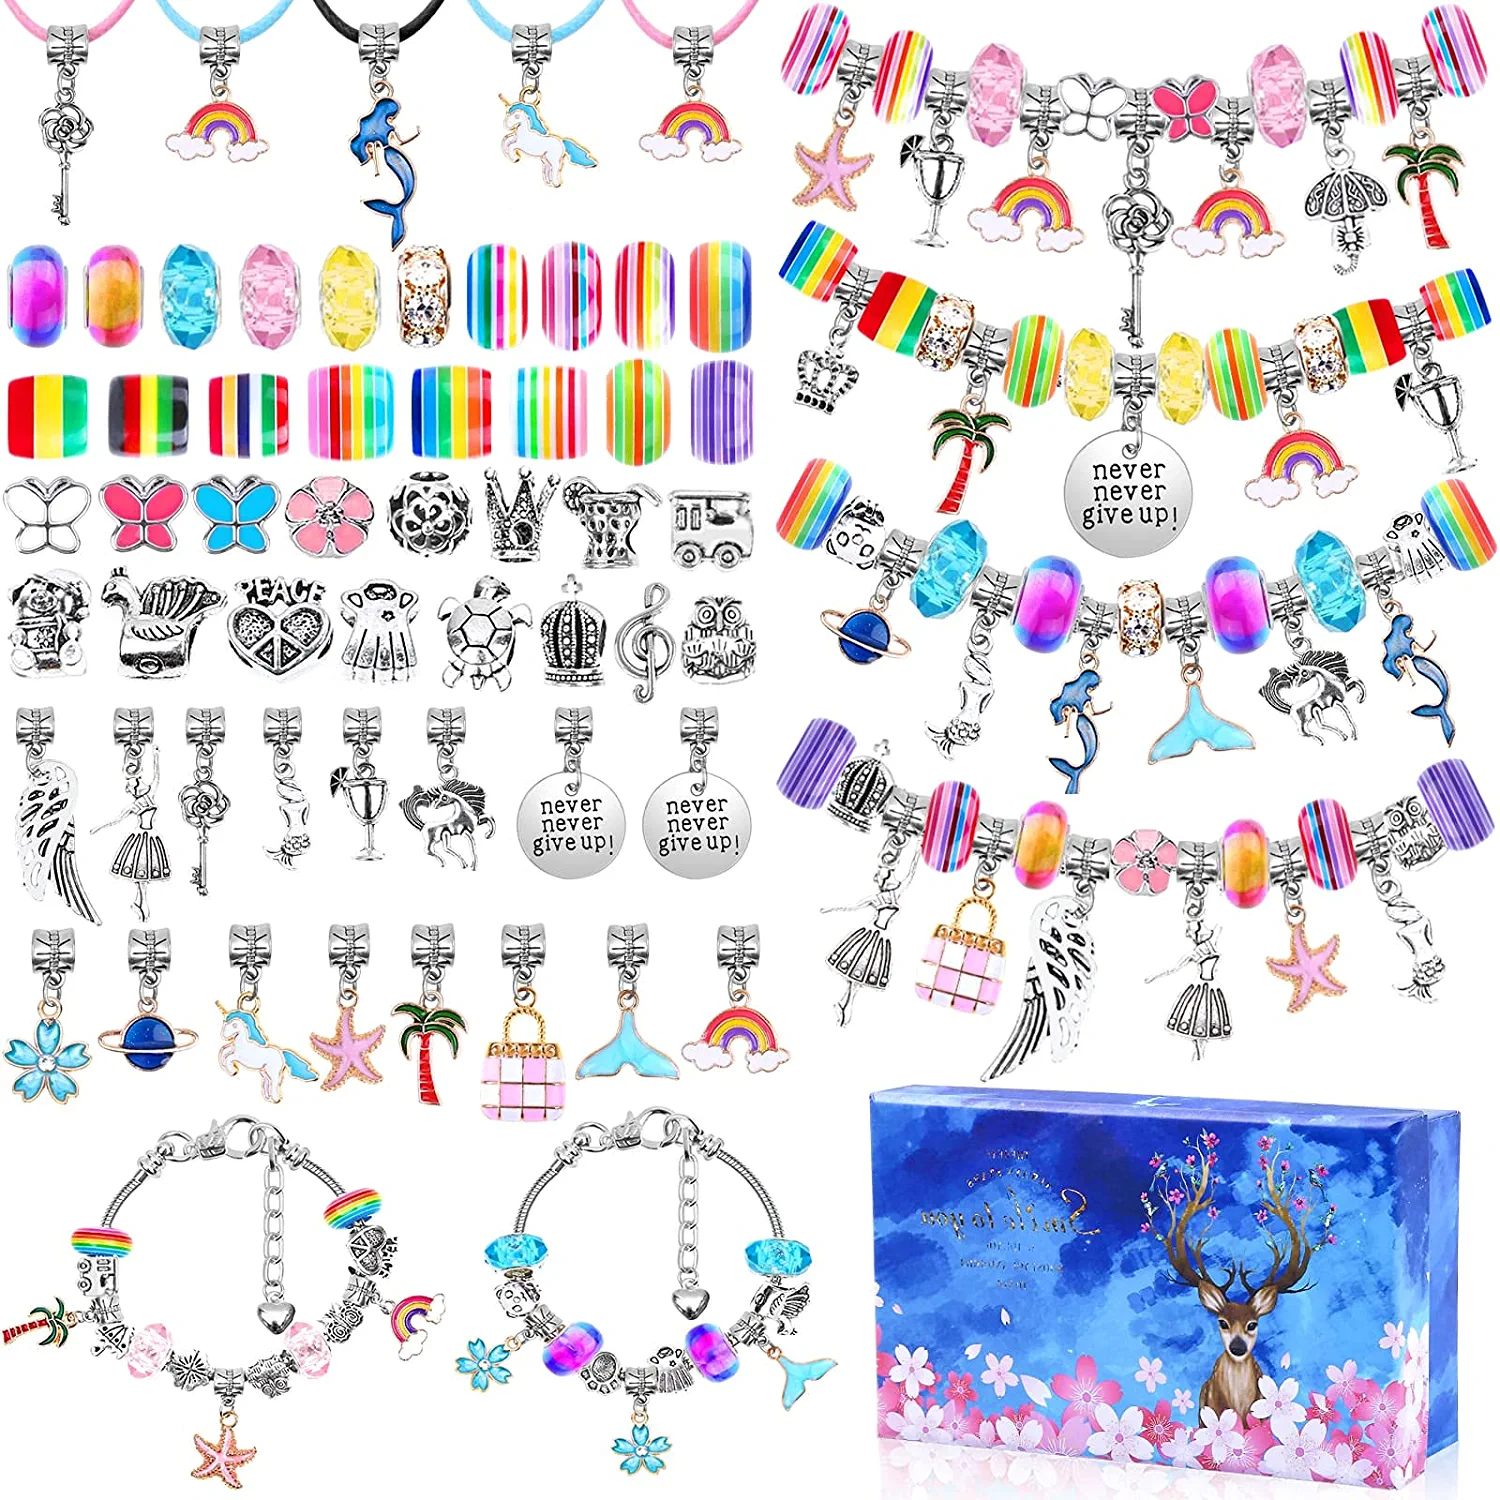 Girls Bracelet Making Kit, 112 Pcs Charm Bracelets Making Kit for Girls, Charm Beads Bracelet Jewelry Kit,Jewelry Charms, DIY Bracelets, Teen Girls Jewelry Christmas Gift - image 1 of 7